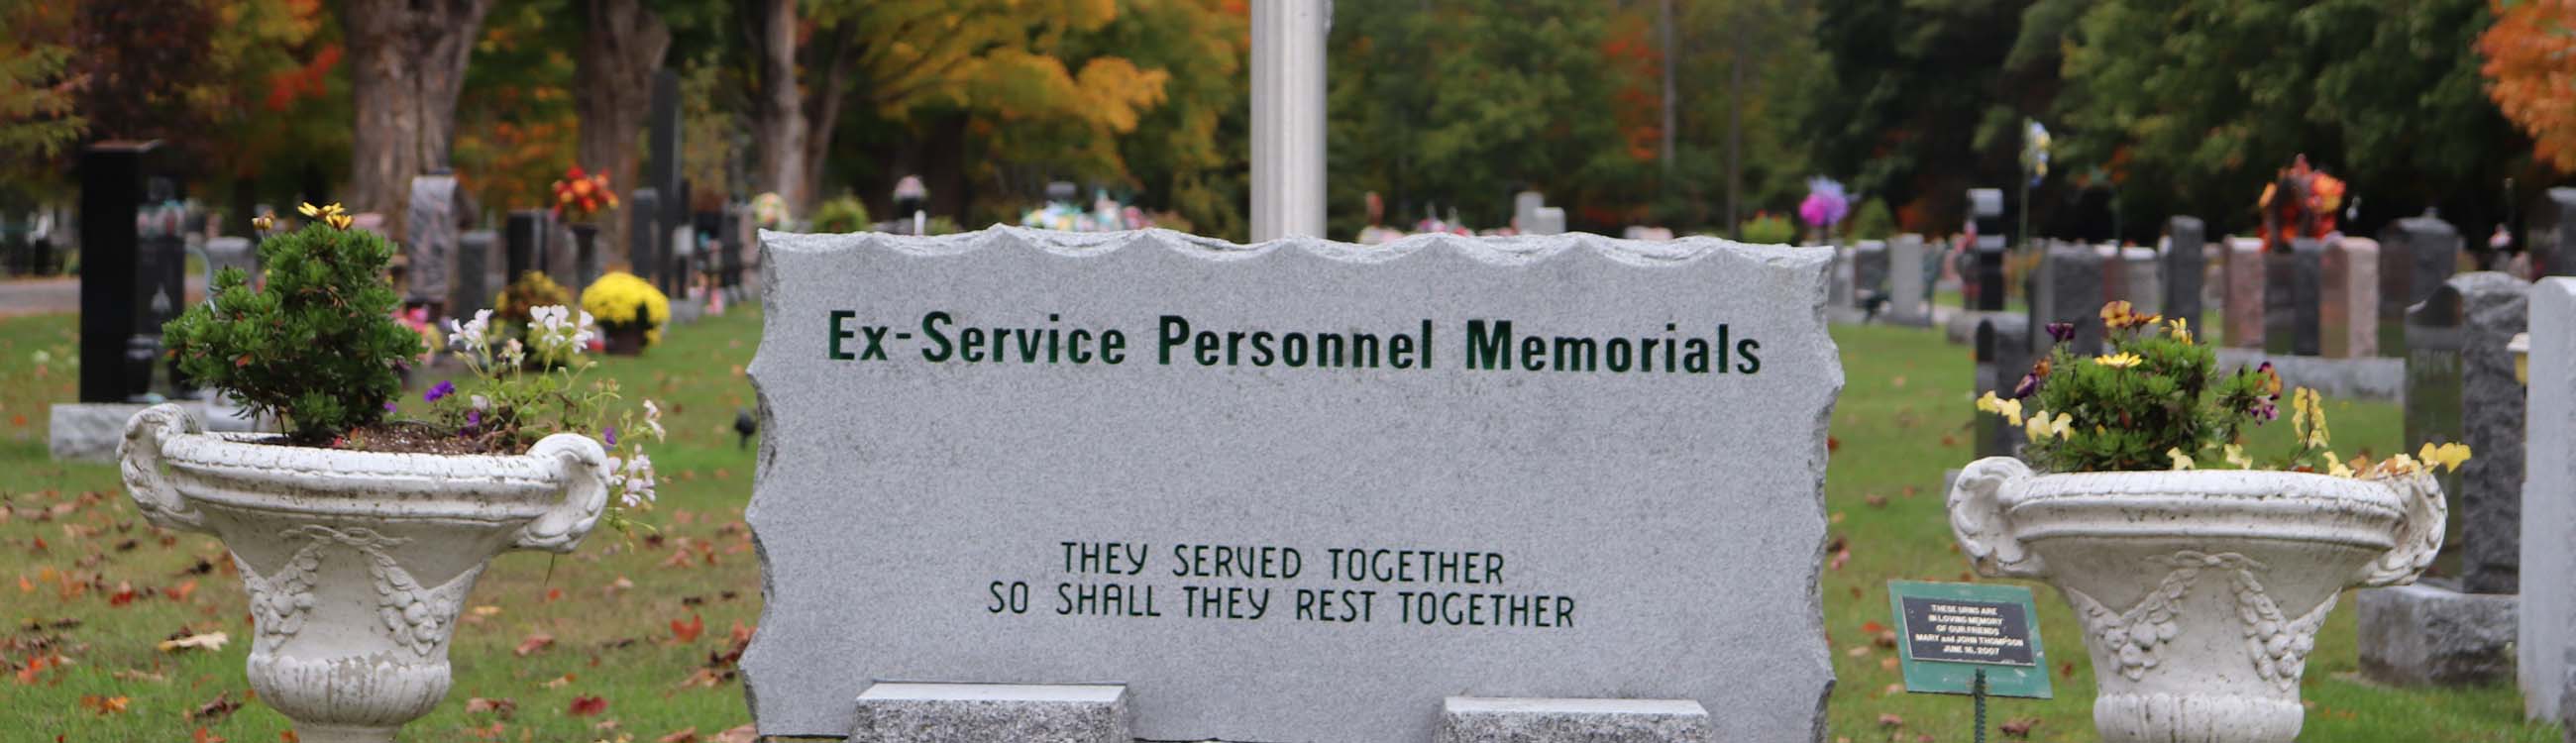 Elmwood cemetery ex-service personnel memorials monument